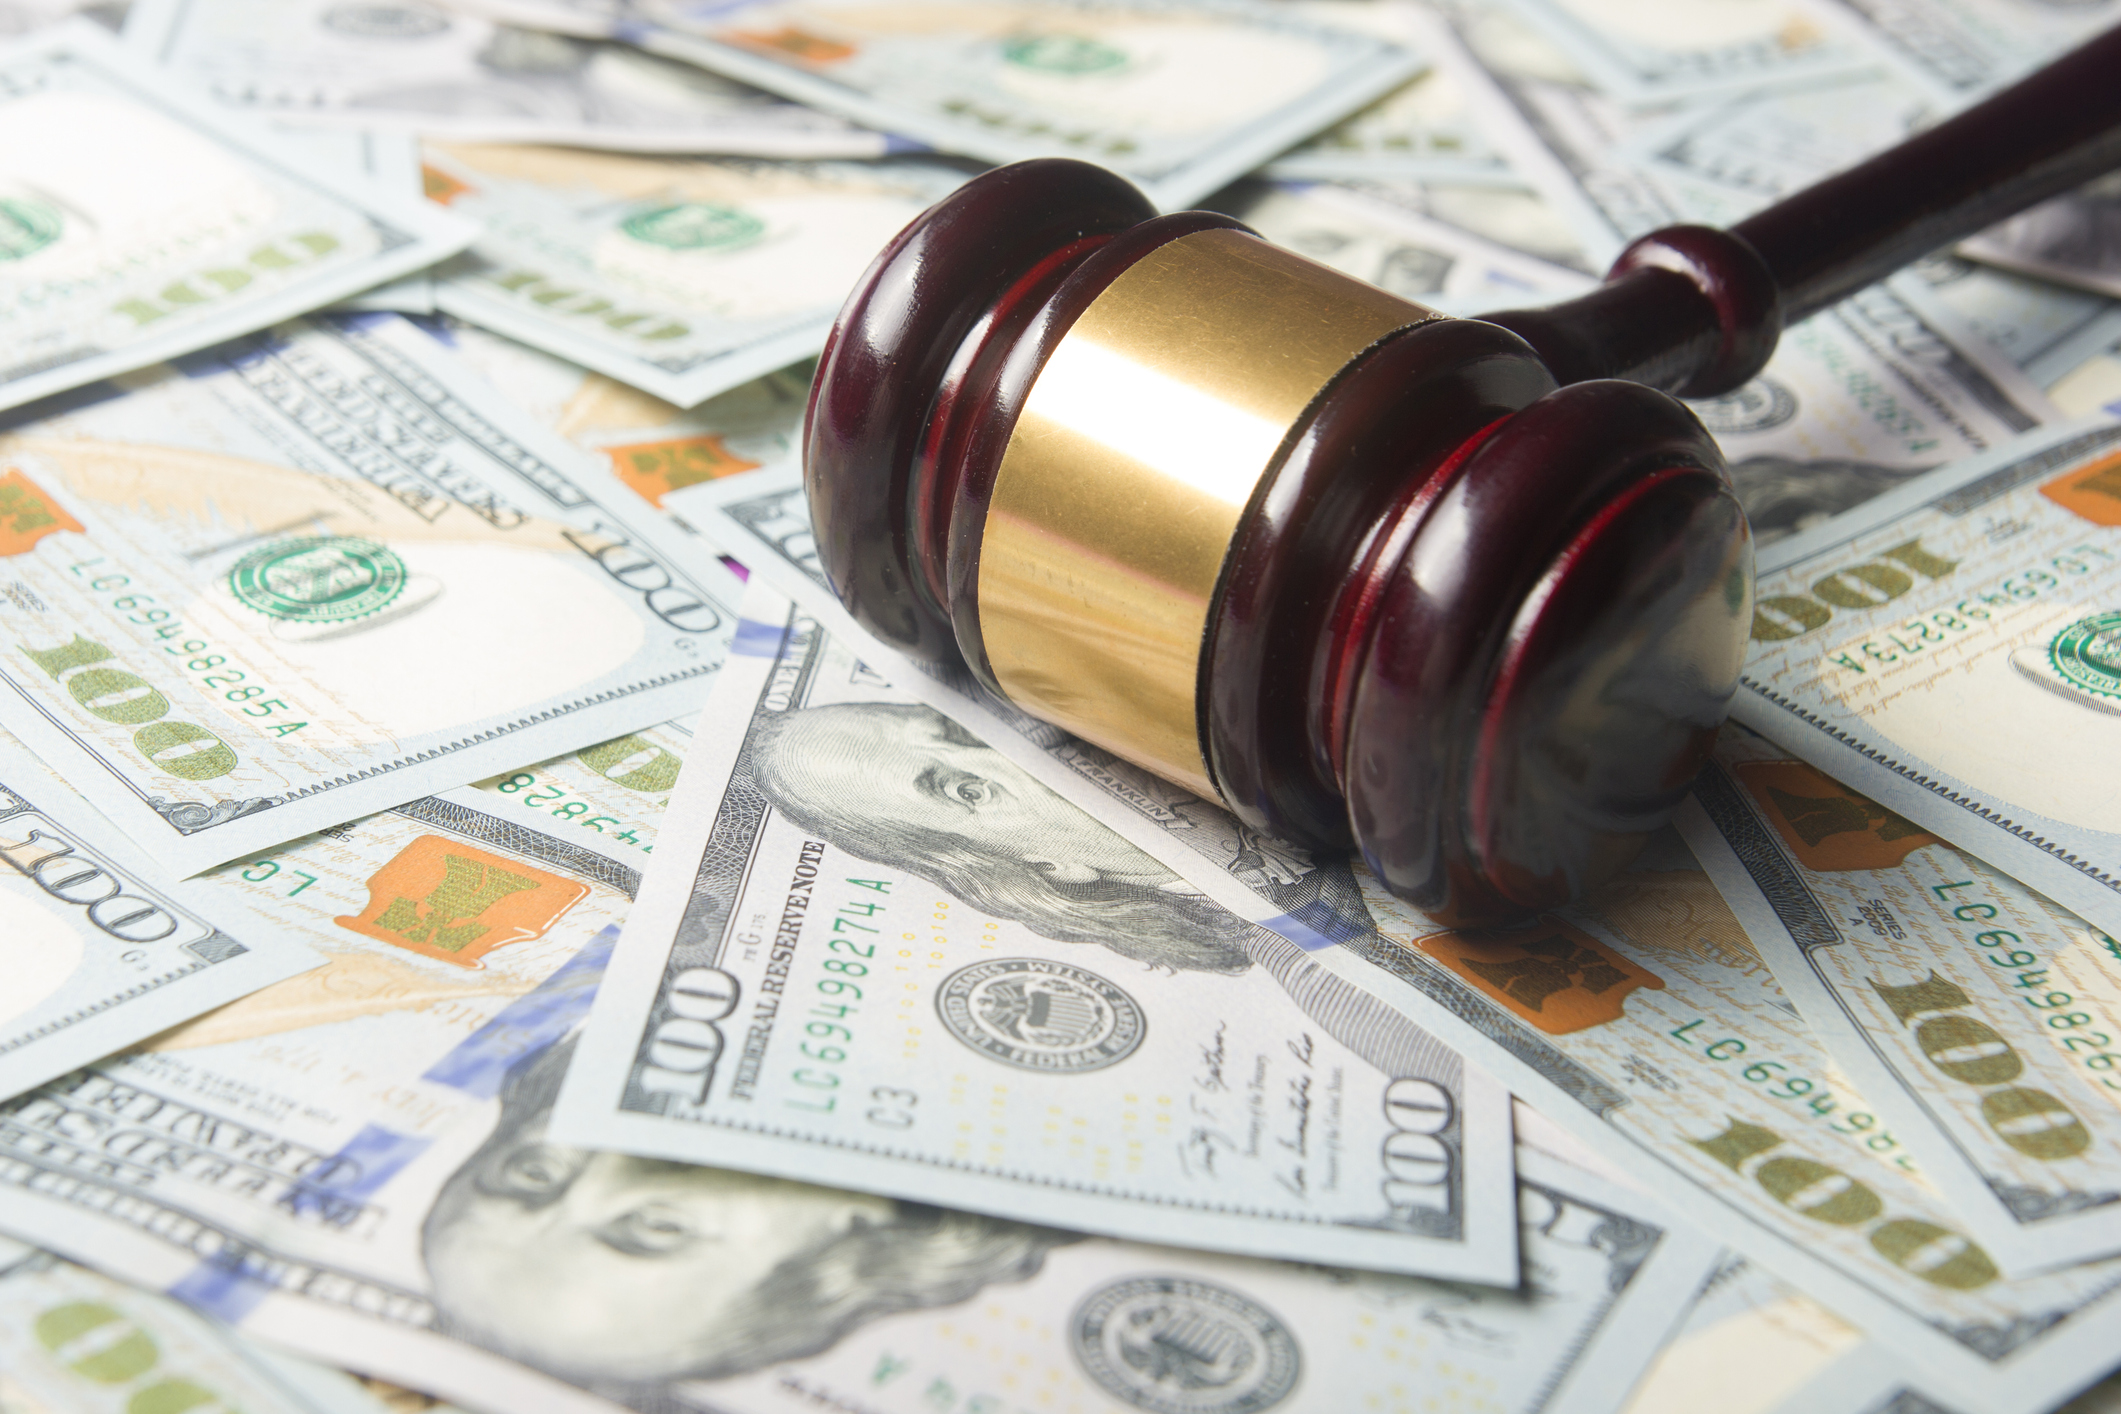 SEC Reaches $400,000 Settlement with Former Investment Advisor